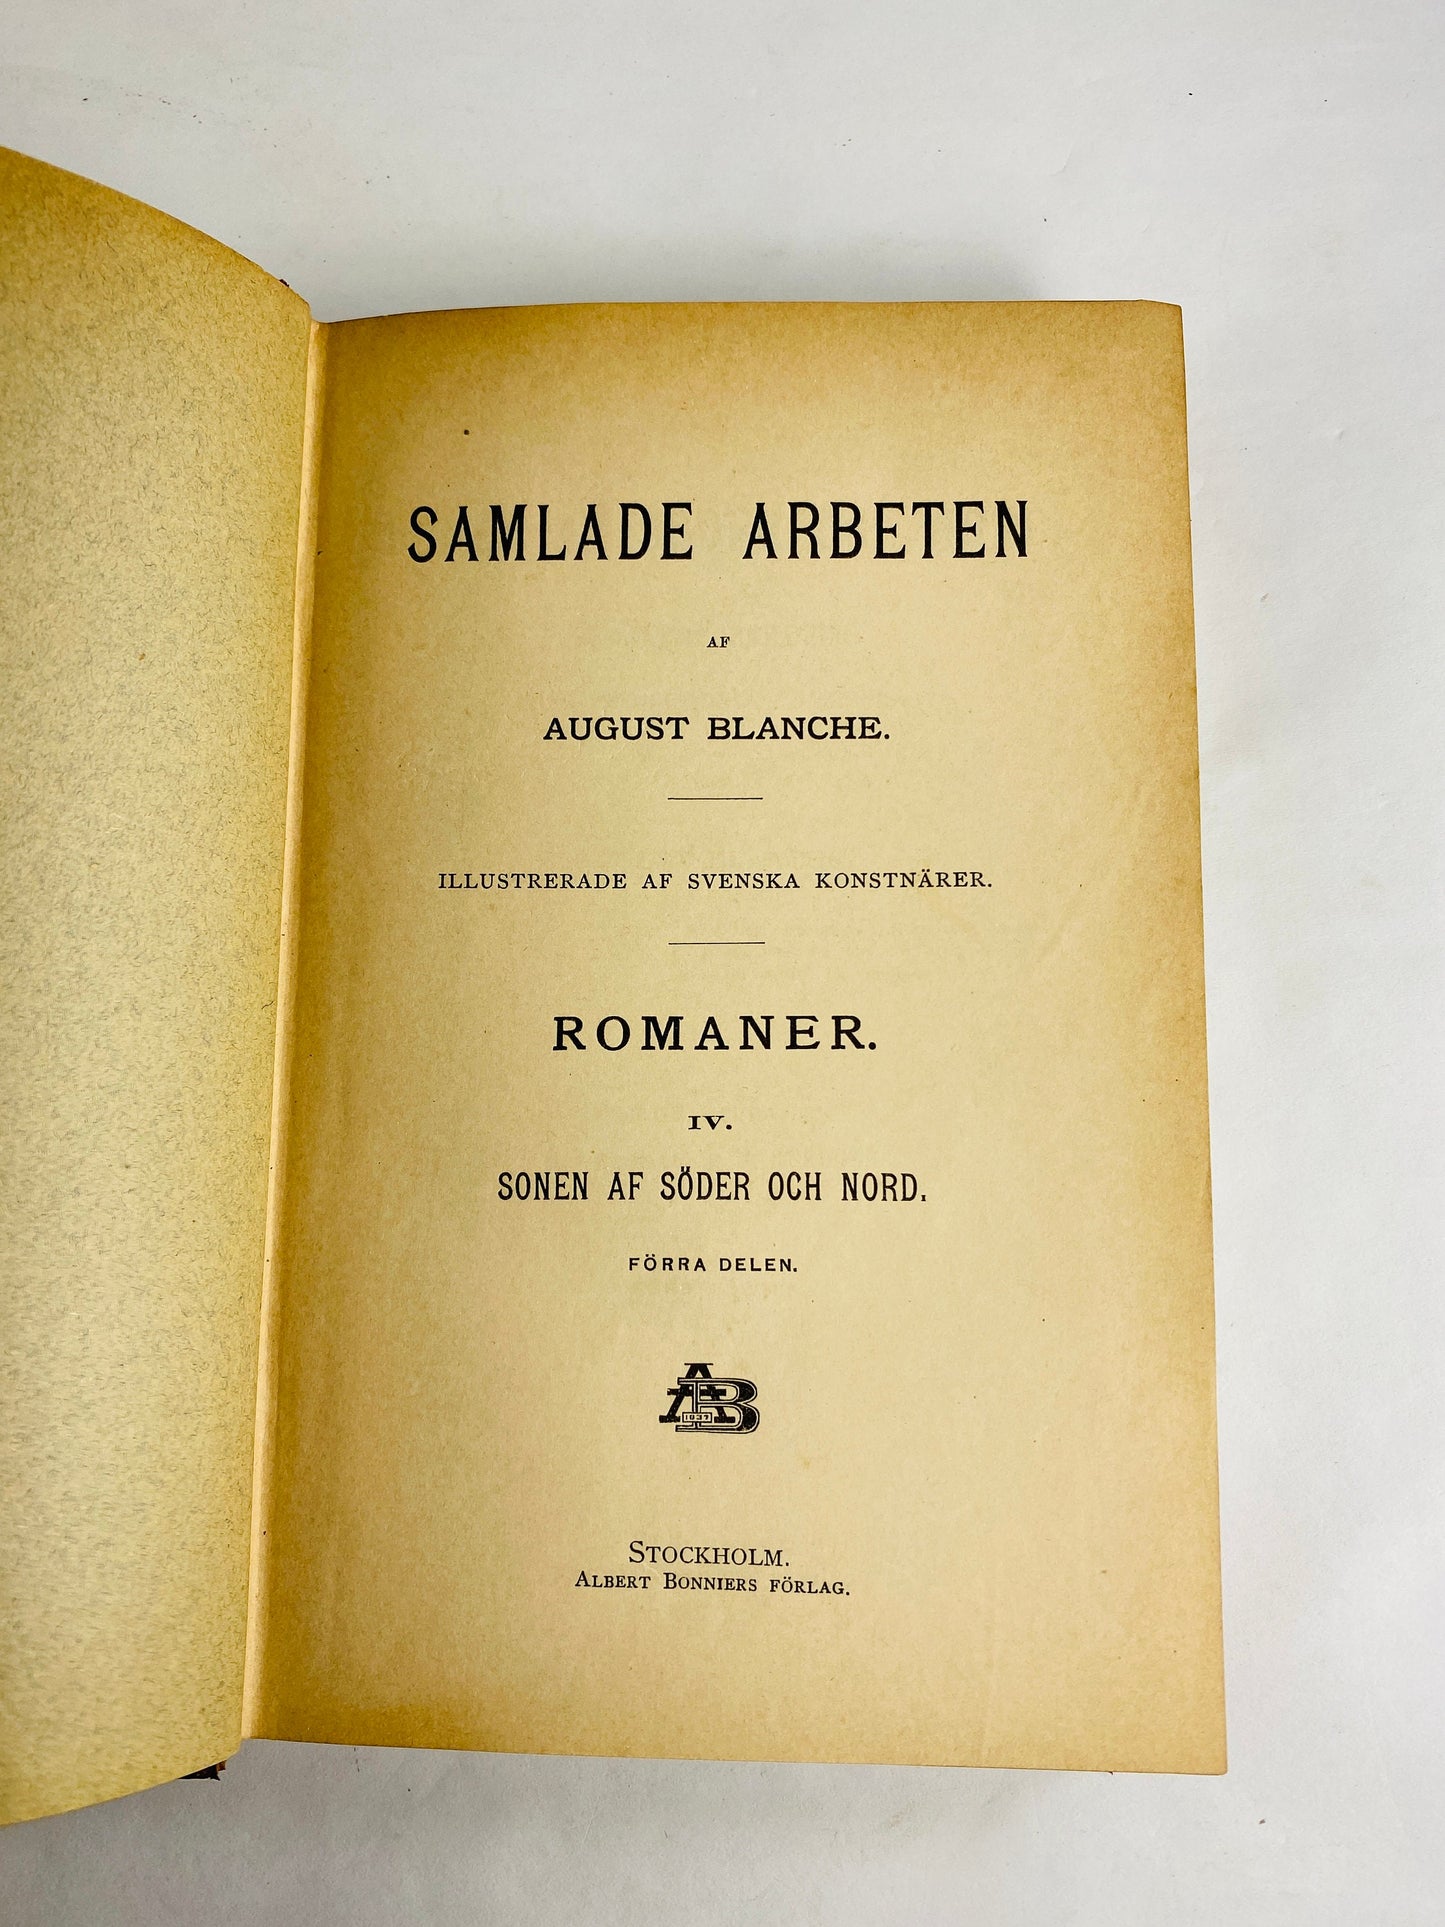 GORGEOUS vintage Swedish book August Blanche Collected works Forlag volume IV Samlade arbeten circa 1891 Stunning antique bookshelf decor